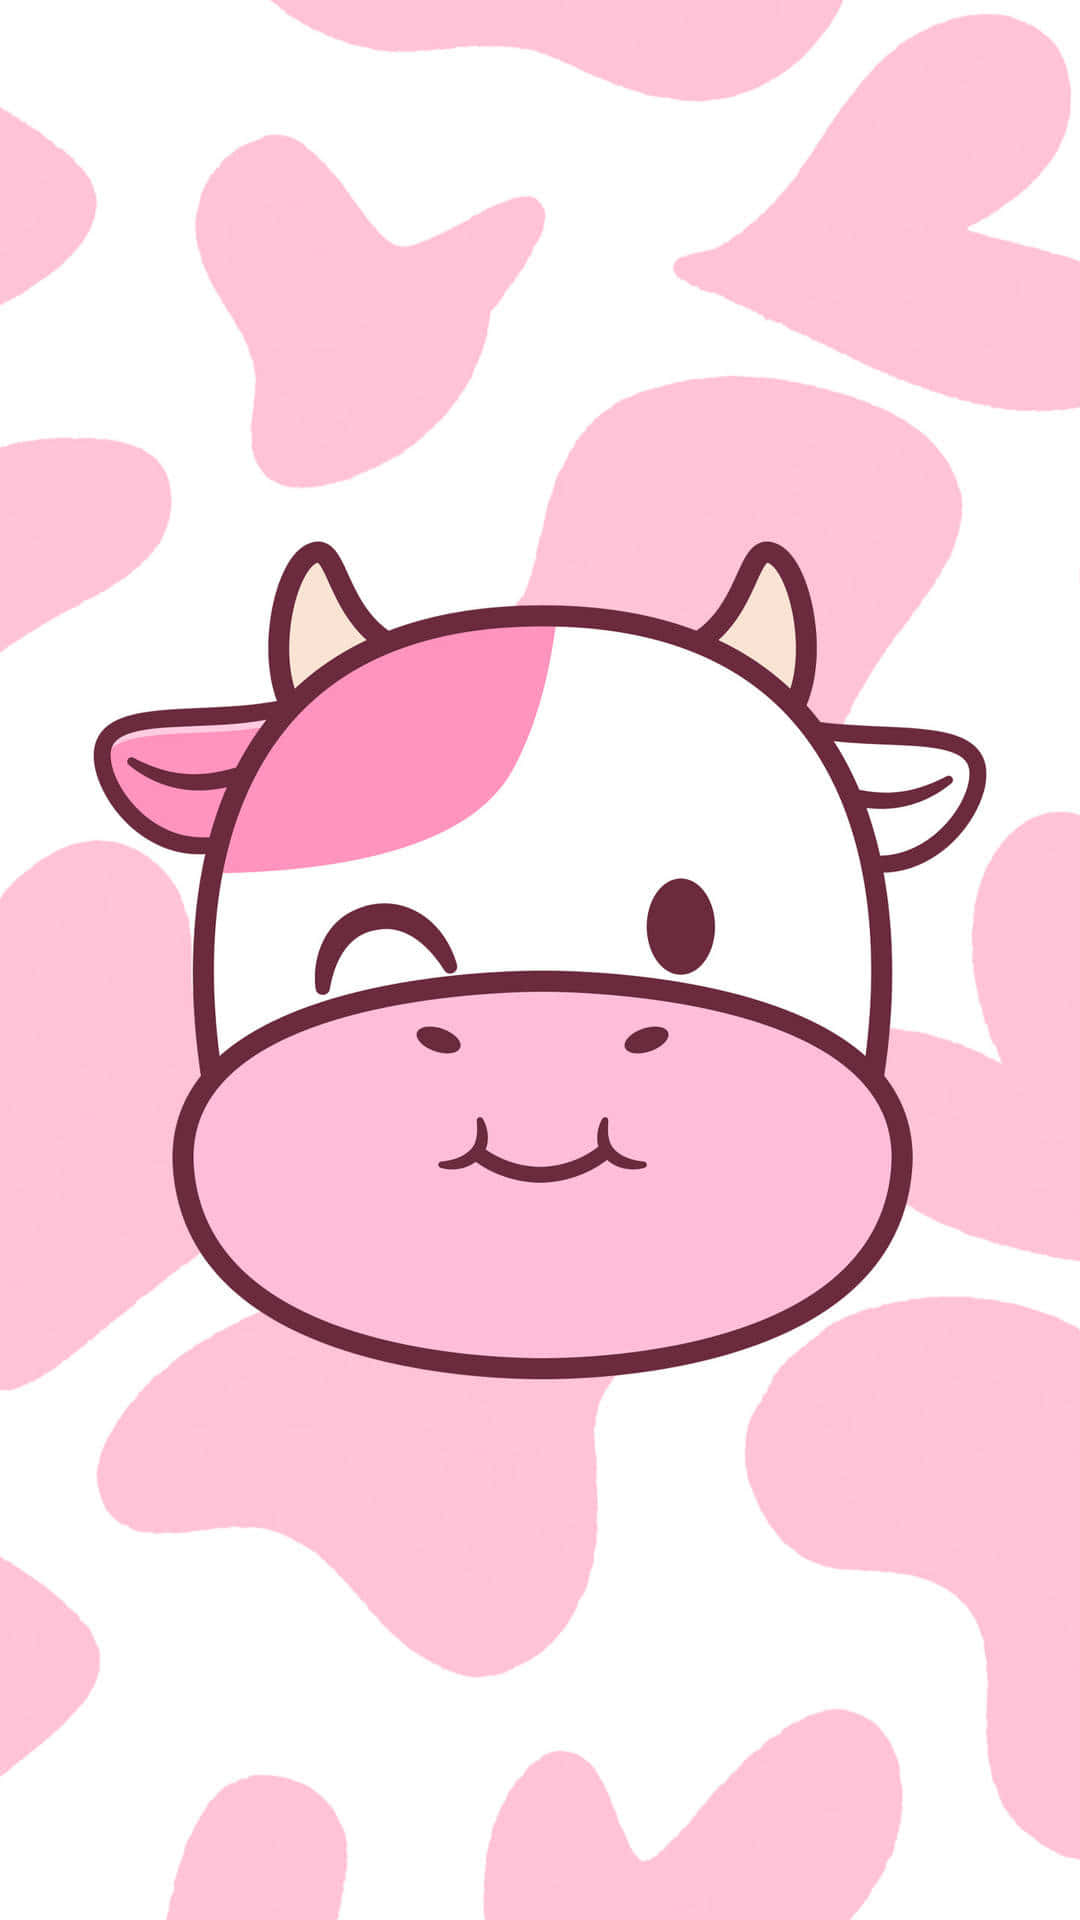 Pink Cow Print Images  Free Download on Freepik